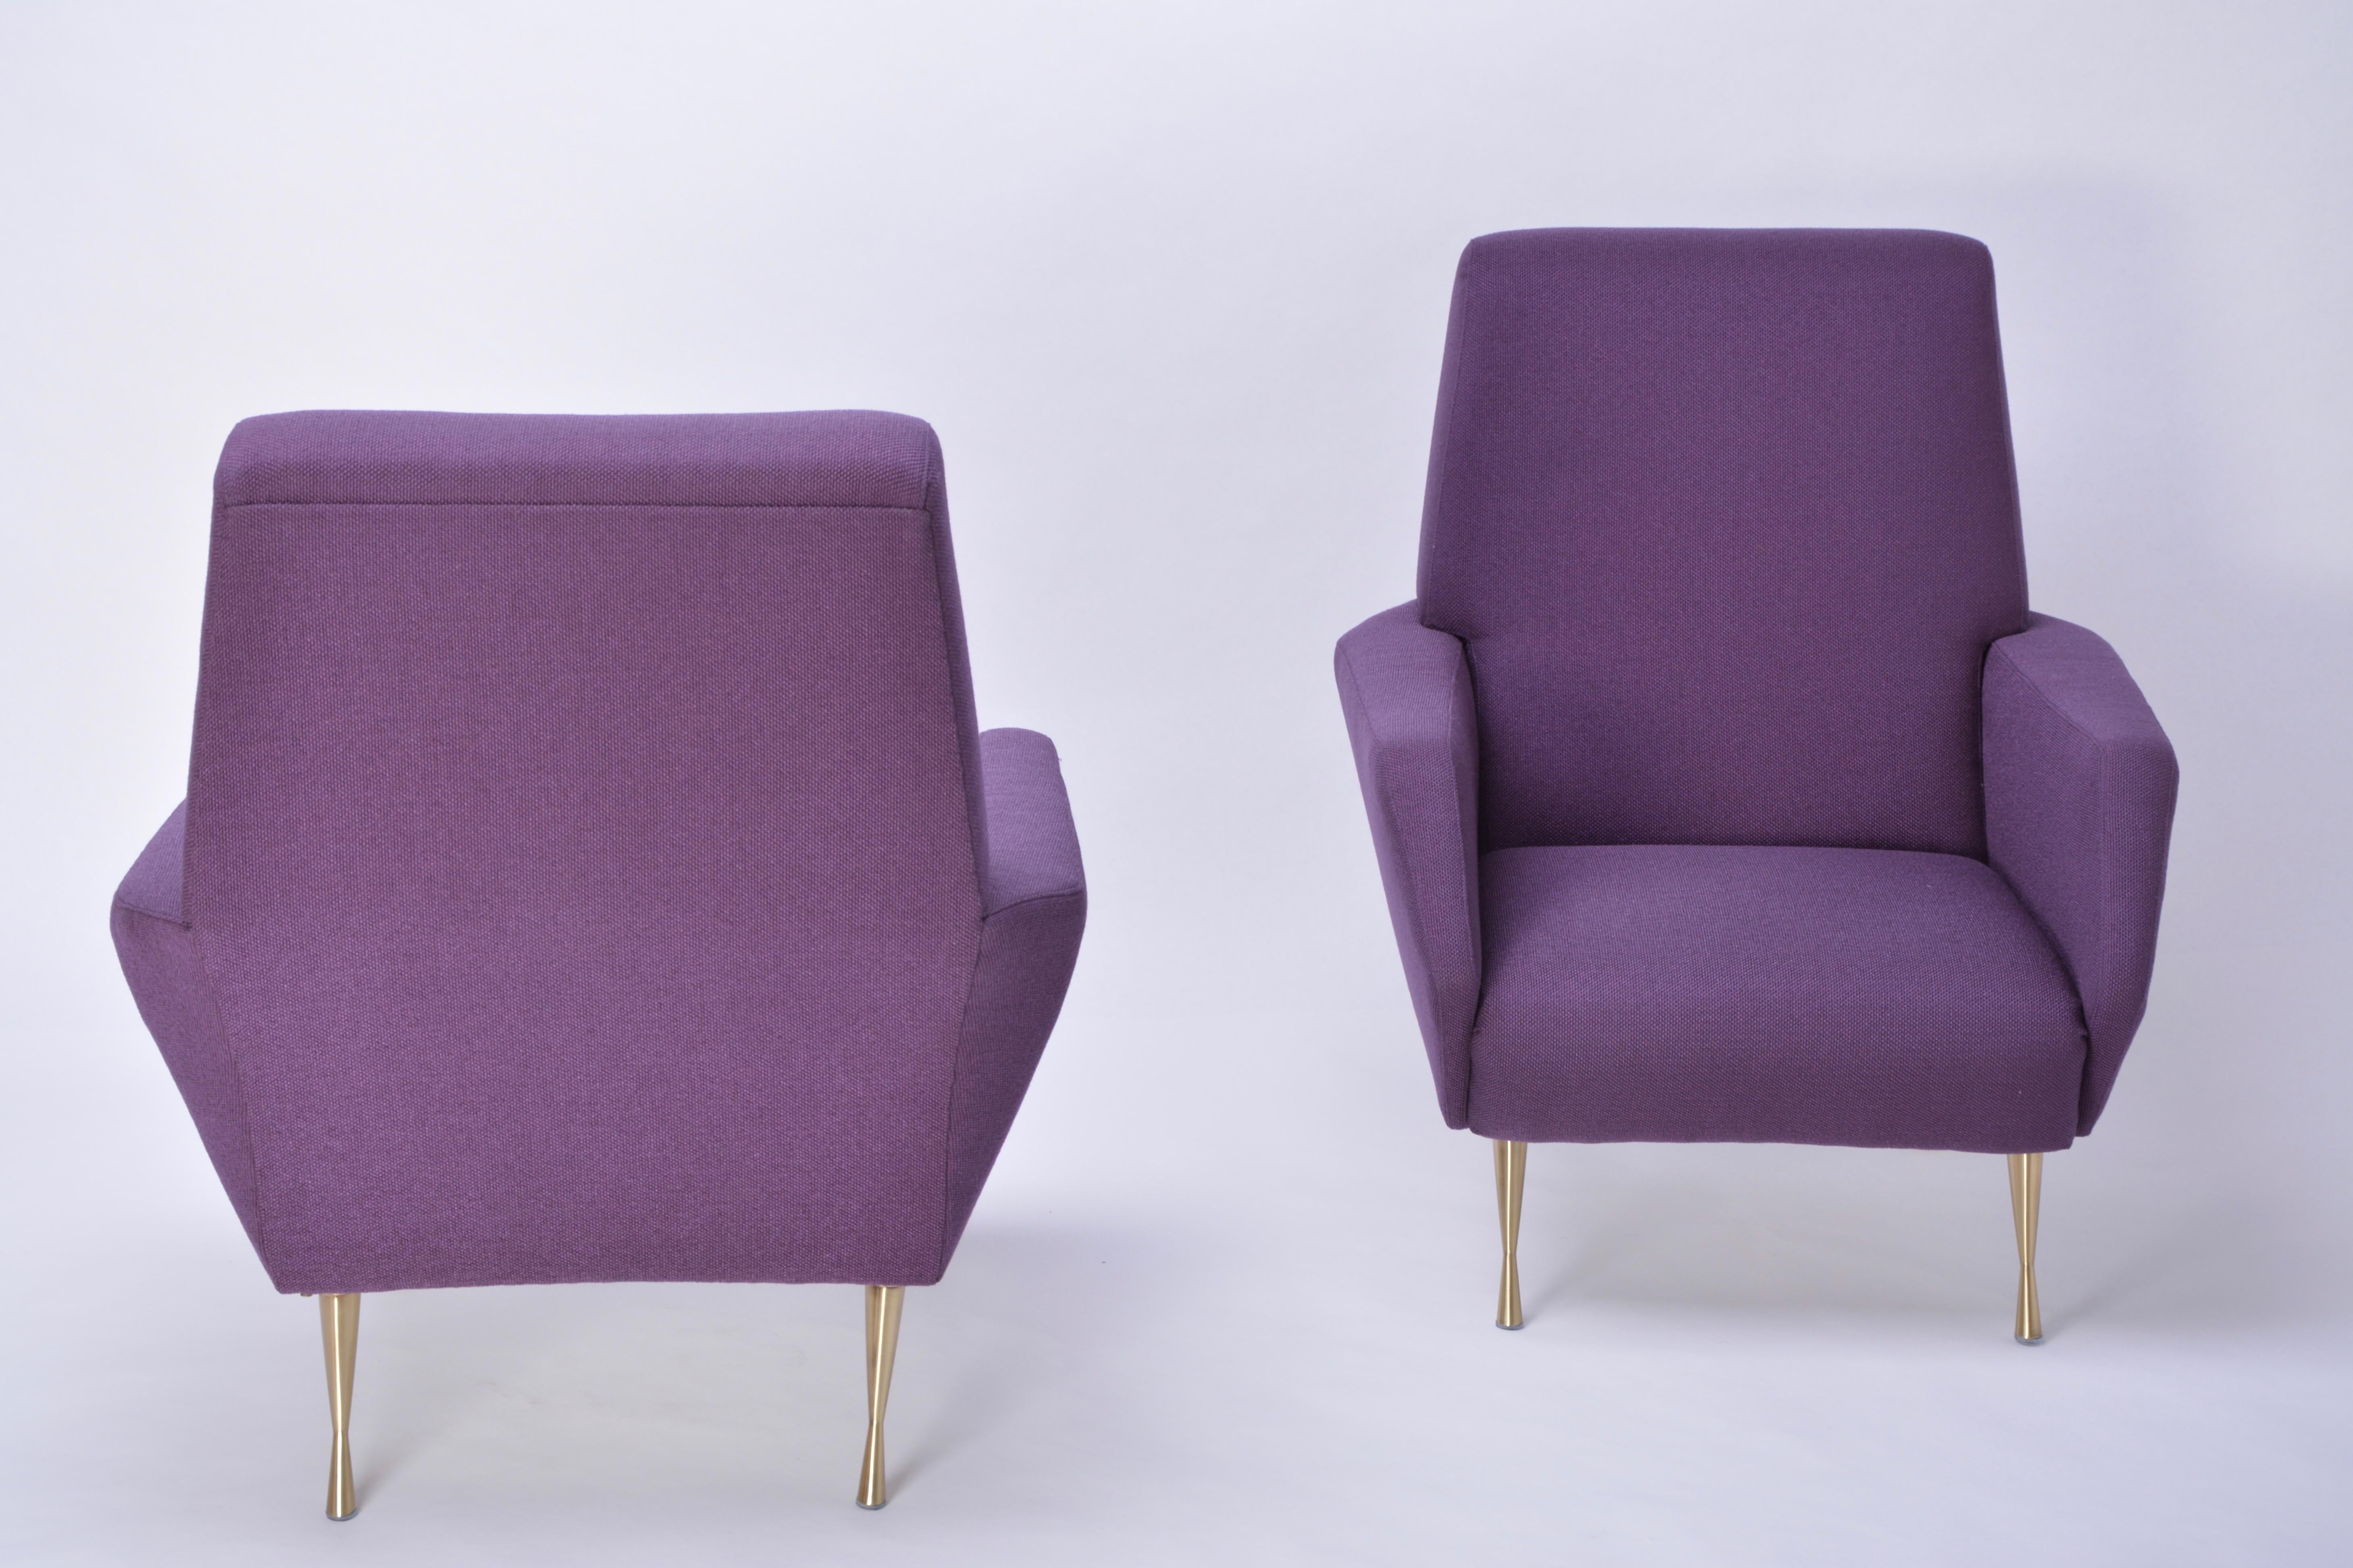 20th Century Pair of reupholstered Mid-Century Modern purple Italian lounge chairs